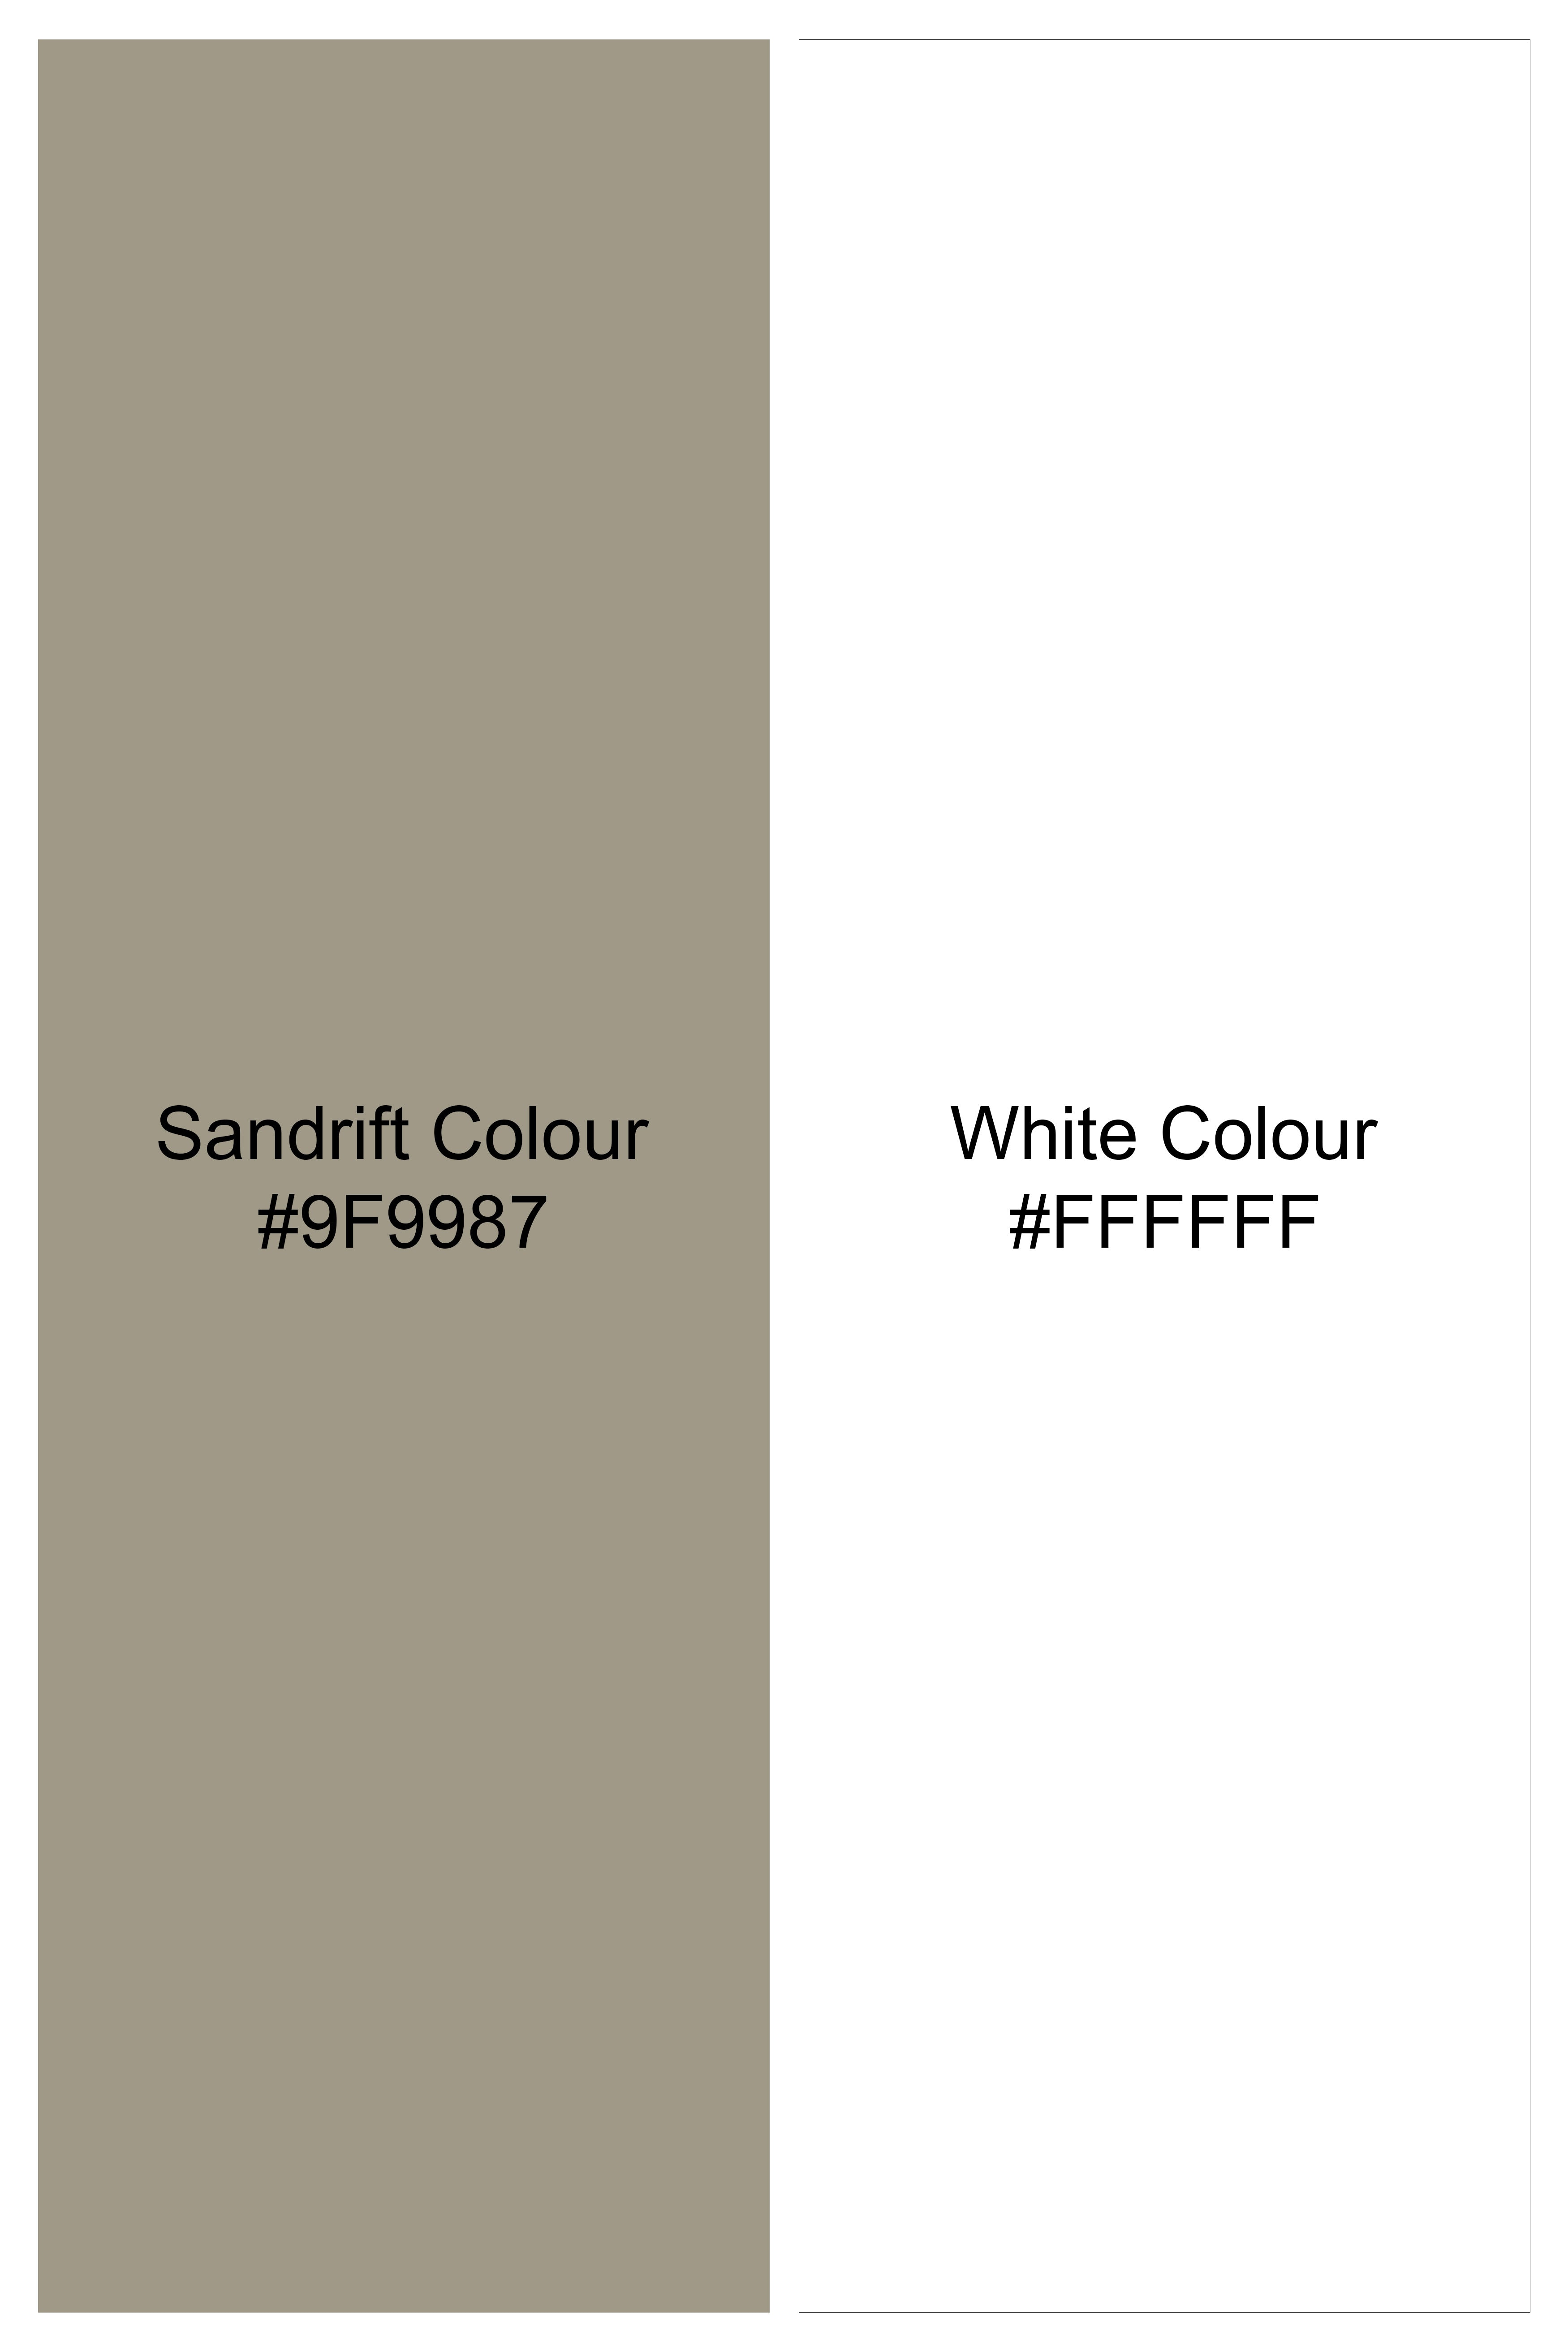 Sandrift Brown and White Premium Cotton Checkered Crop Top